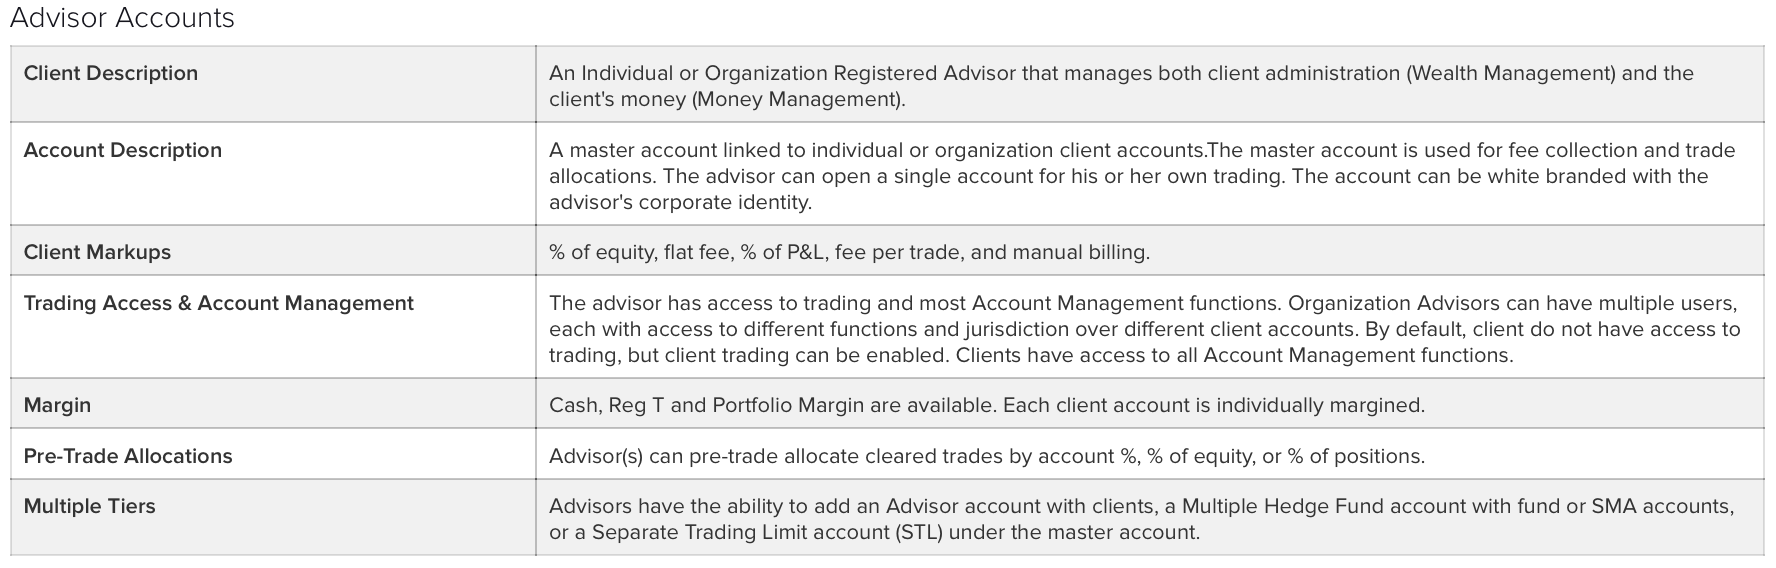 Account details of advisor accounts on Interactive brokers